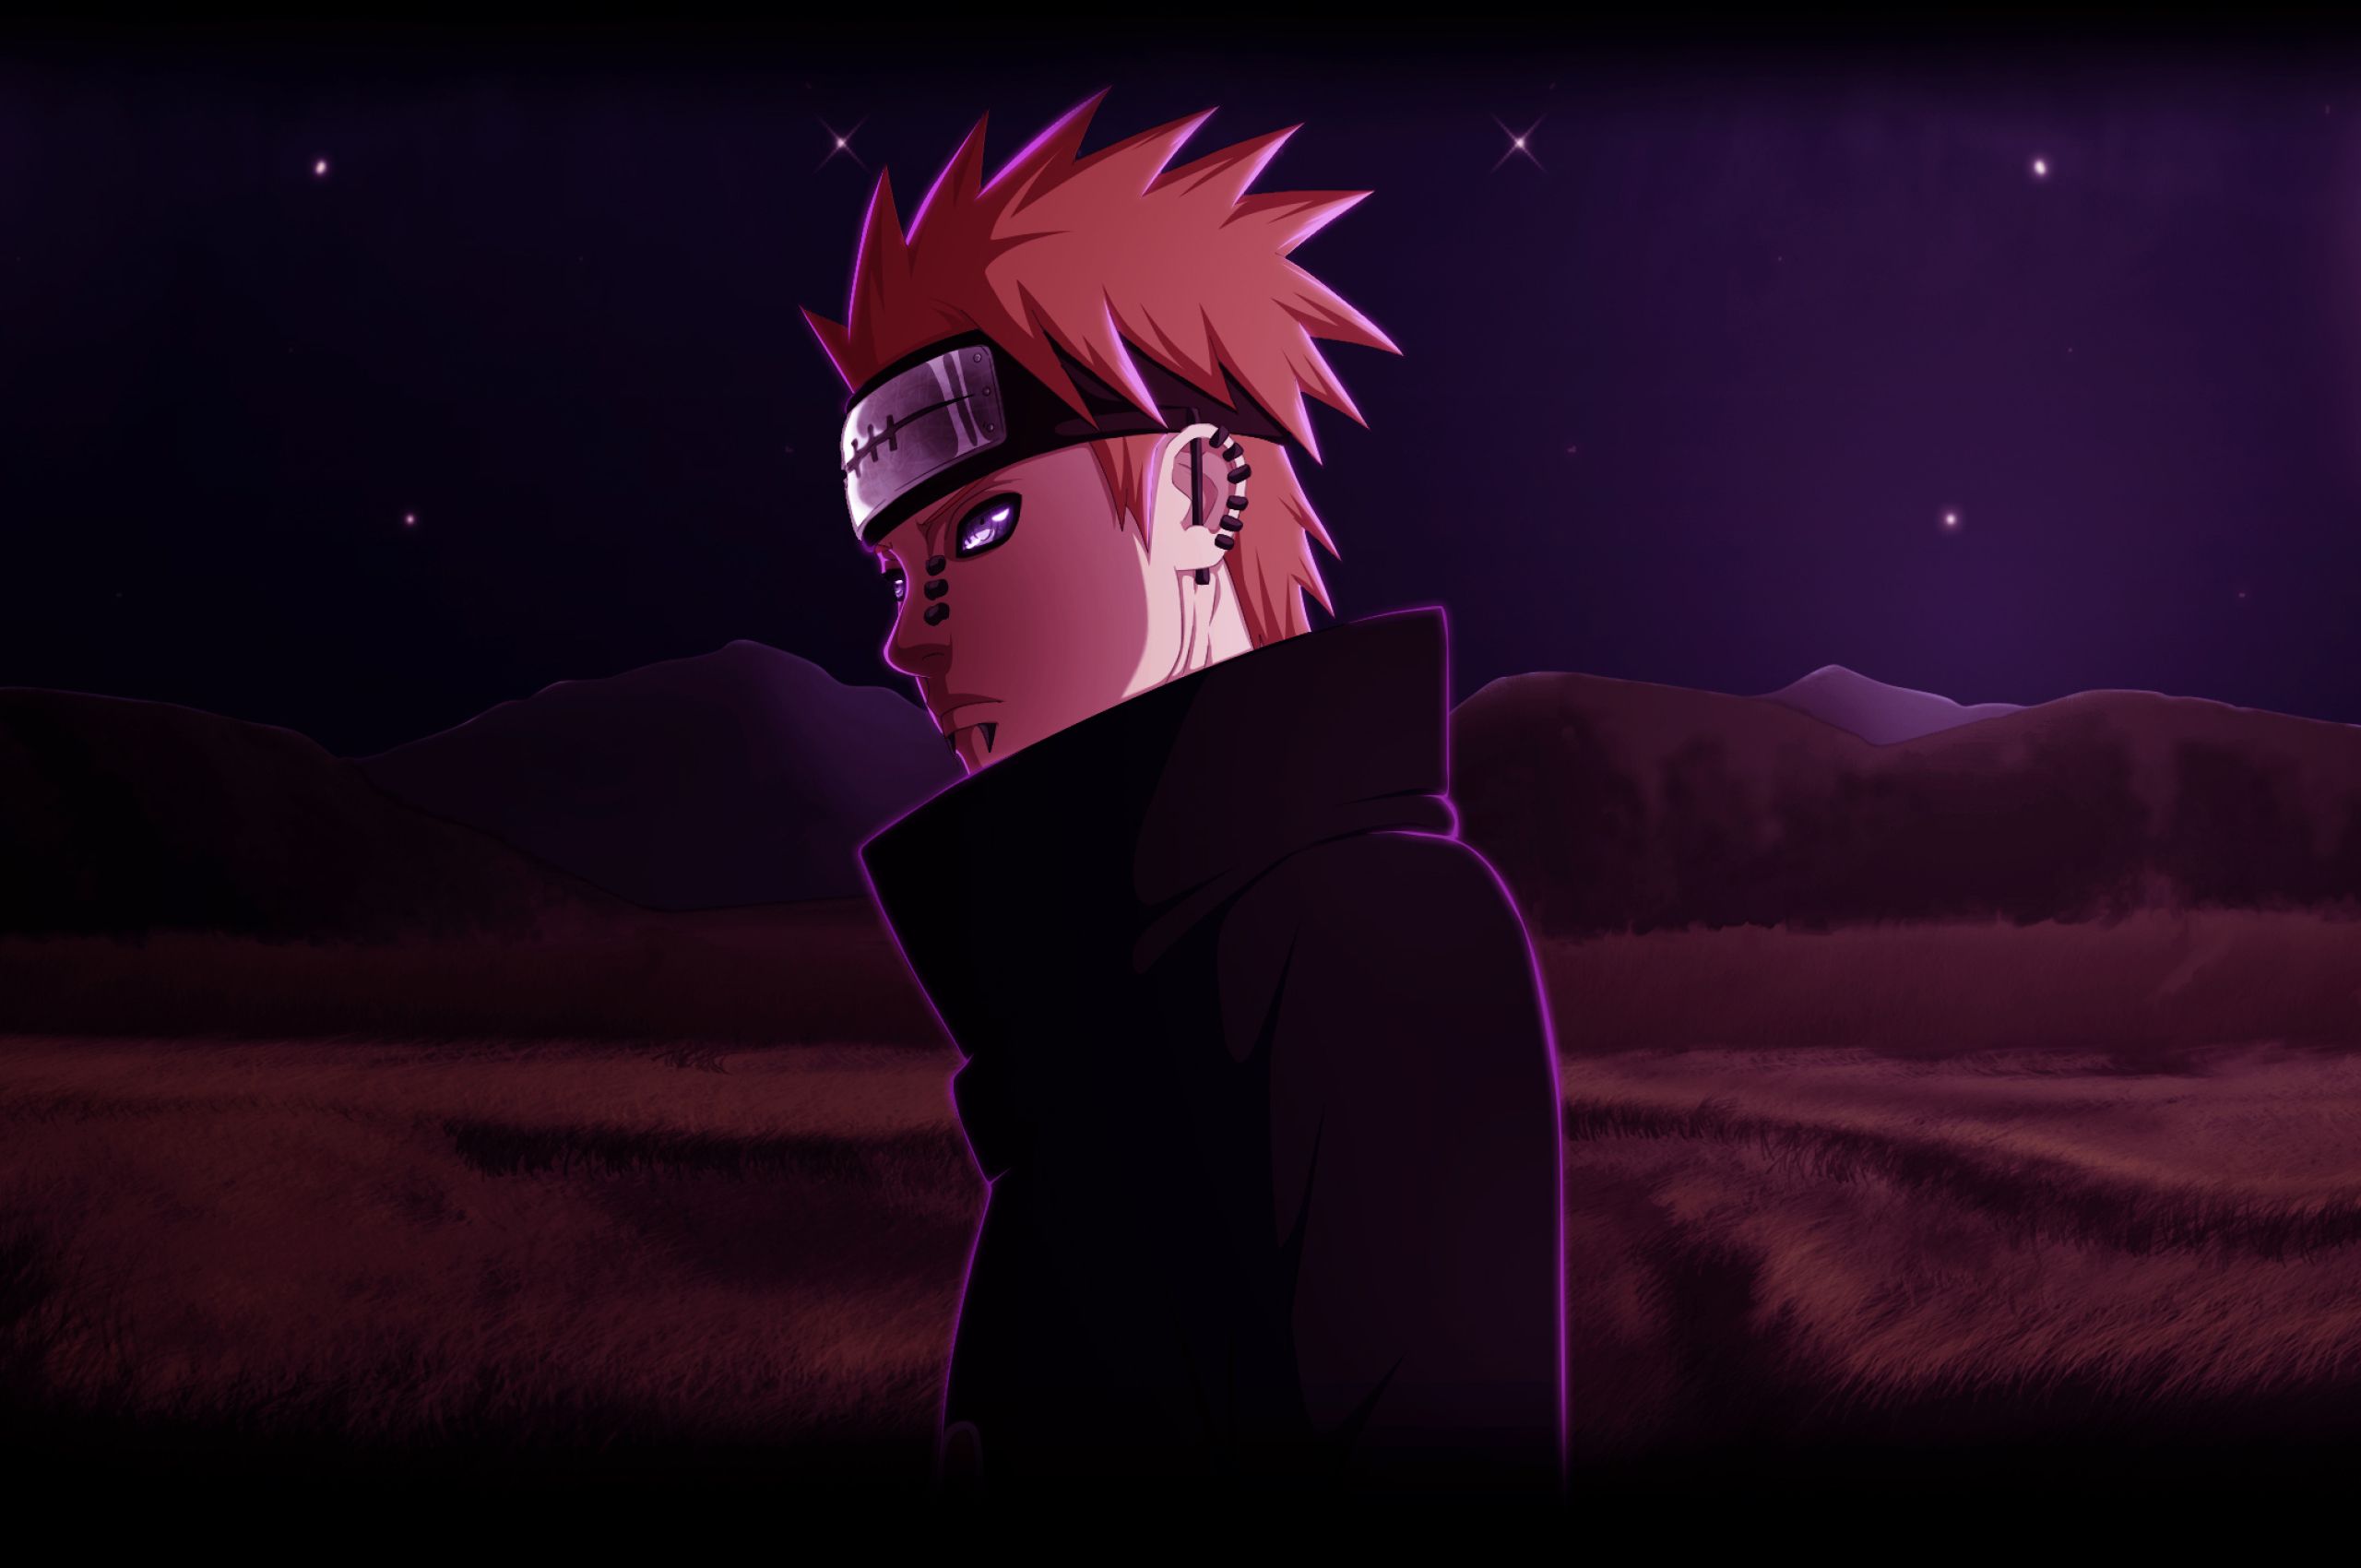 Pain Yahiko Naruto Chromebook Pixel Wallpaper, HD Anime 4K Wallpaper, Image, Photo and Background